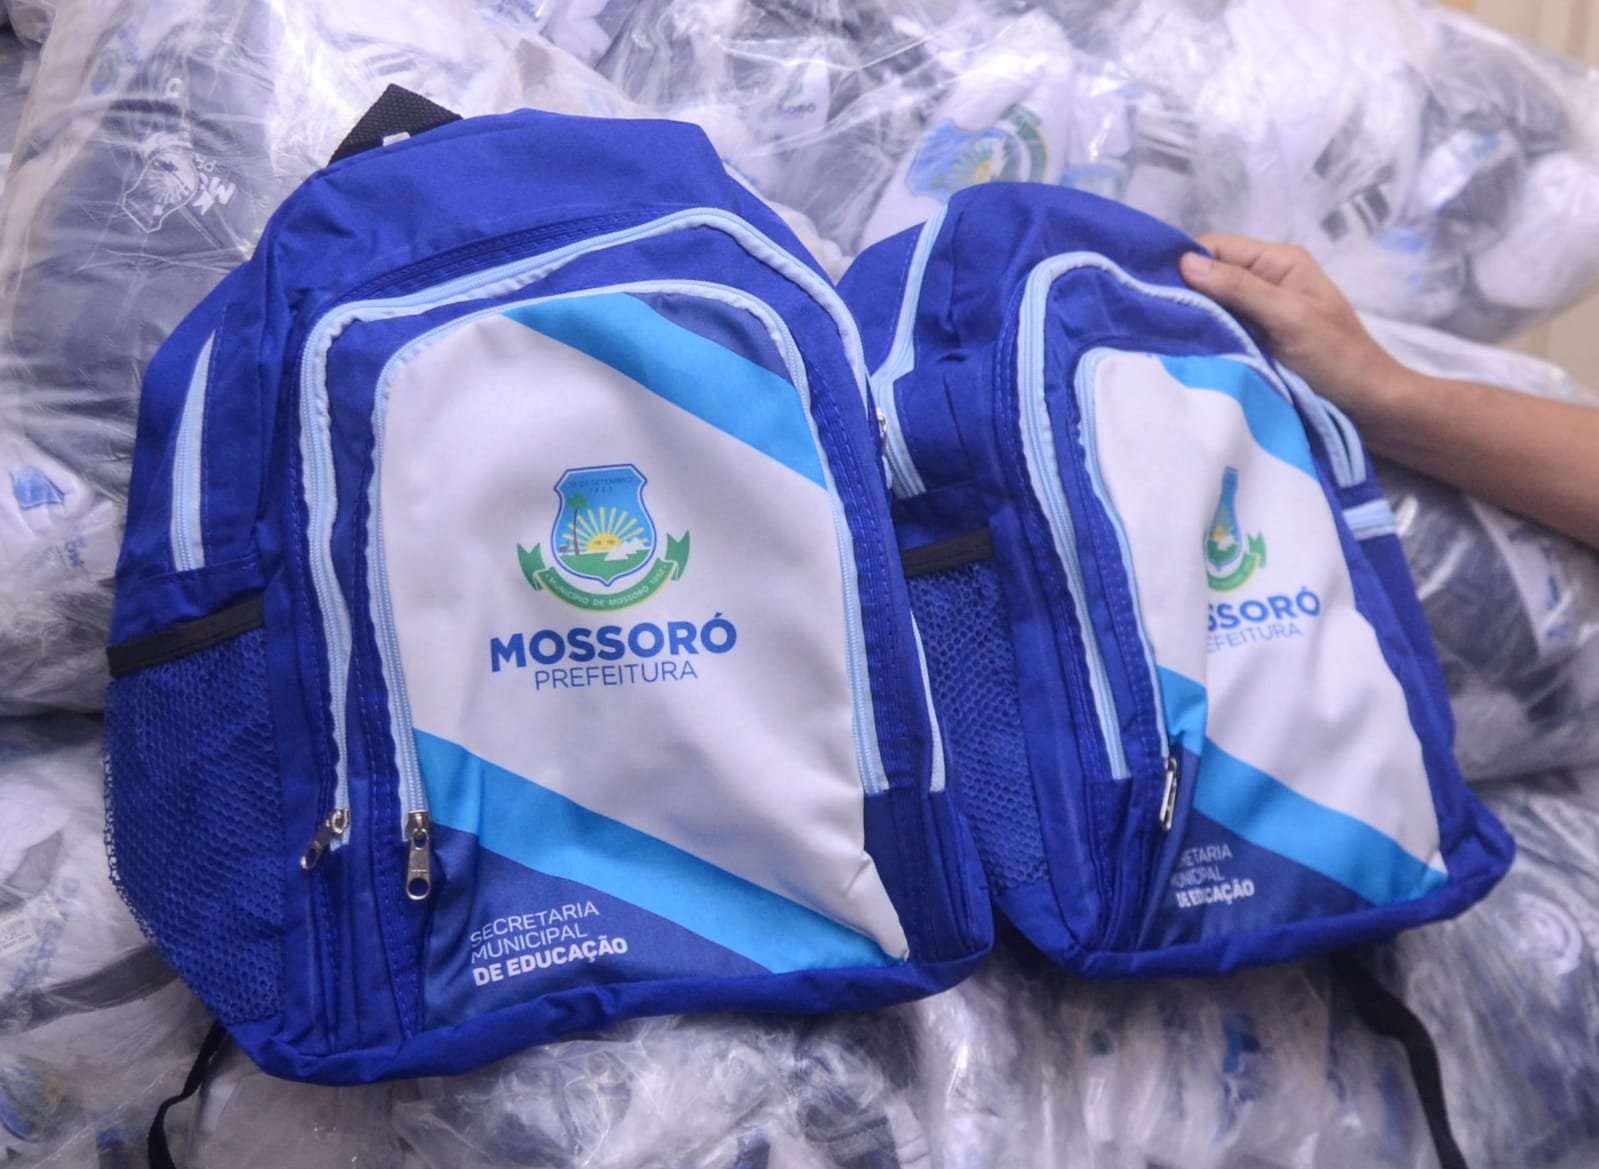 Prefeitura de Mossoró distribui fardamento e mochila para alunos da Escola Paulo Cavalcante